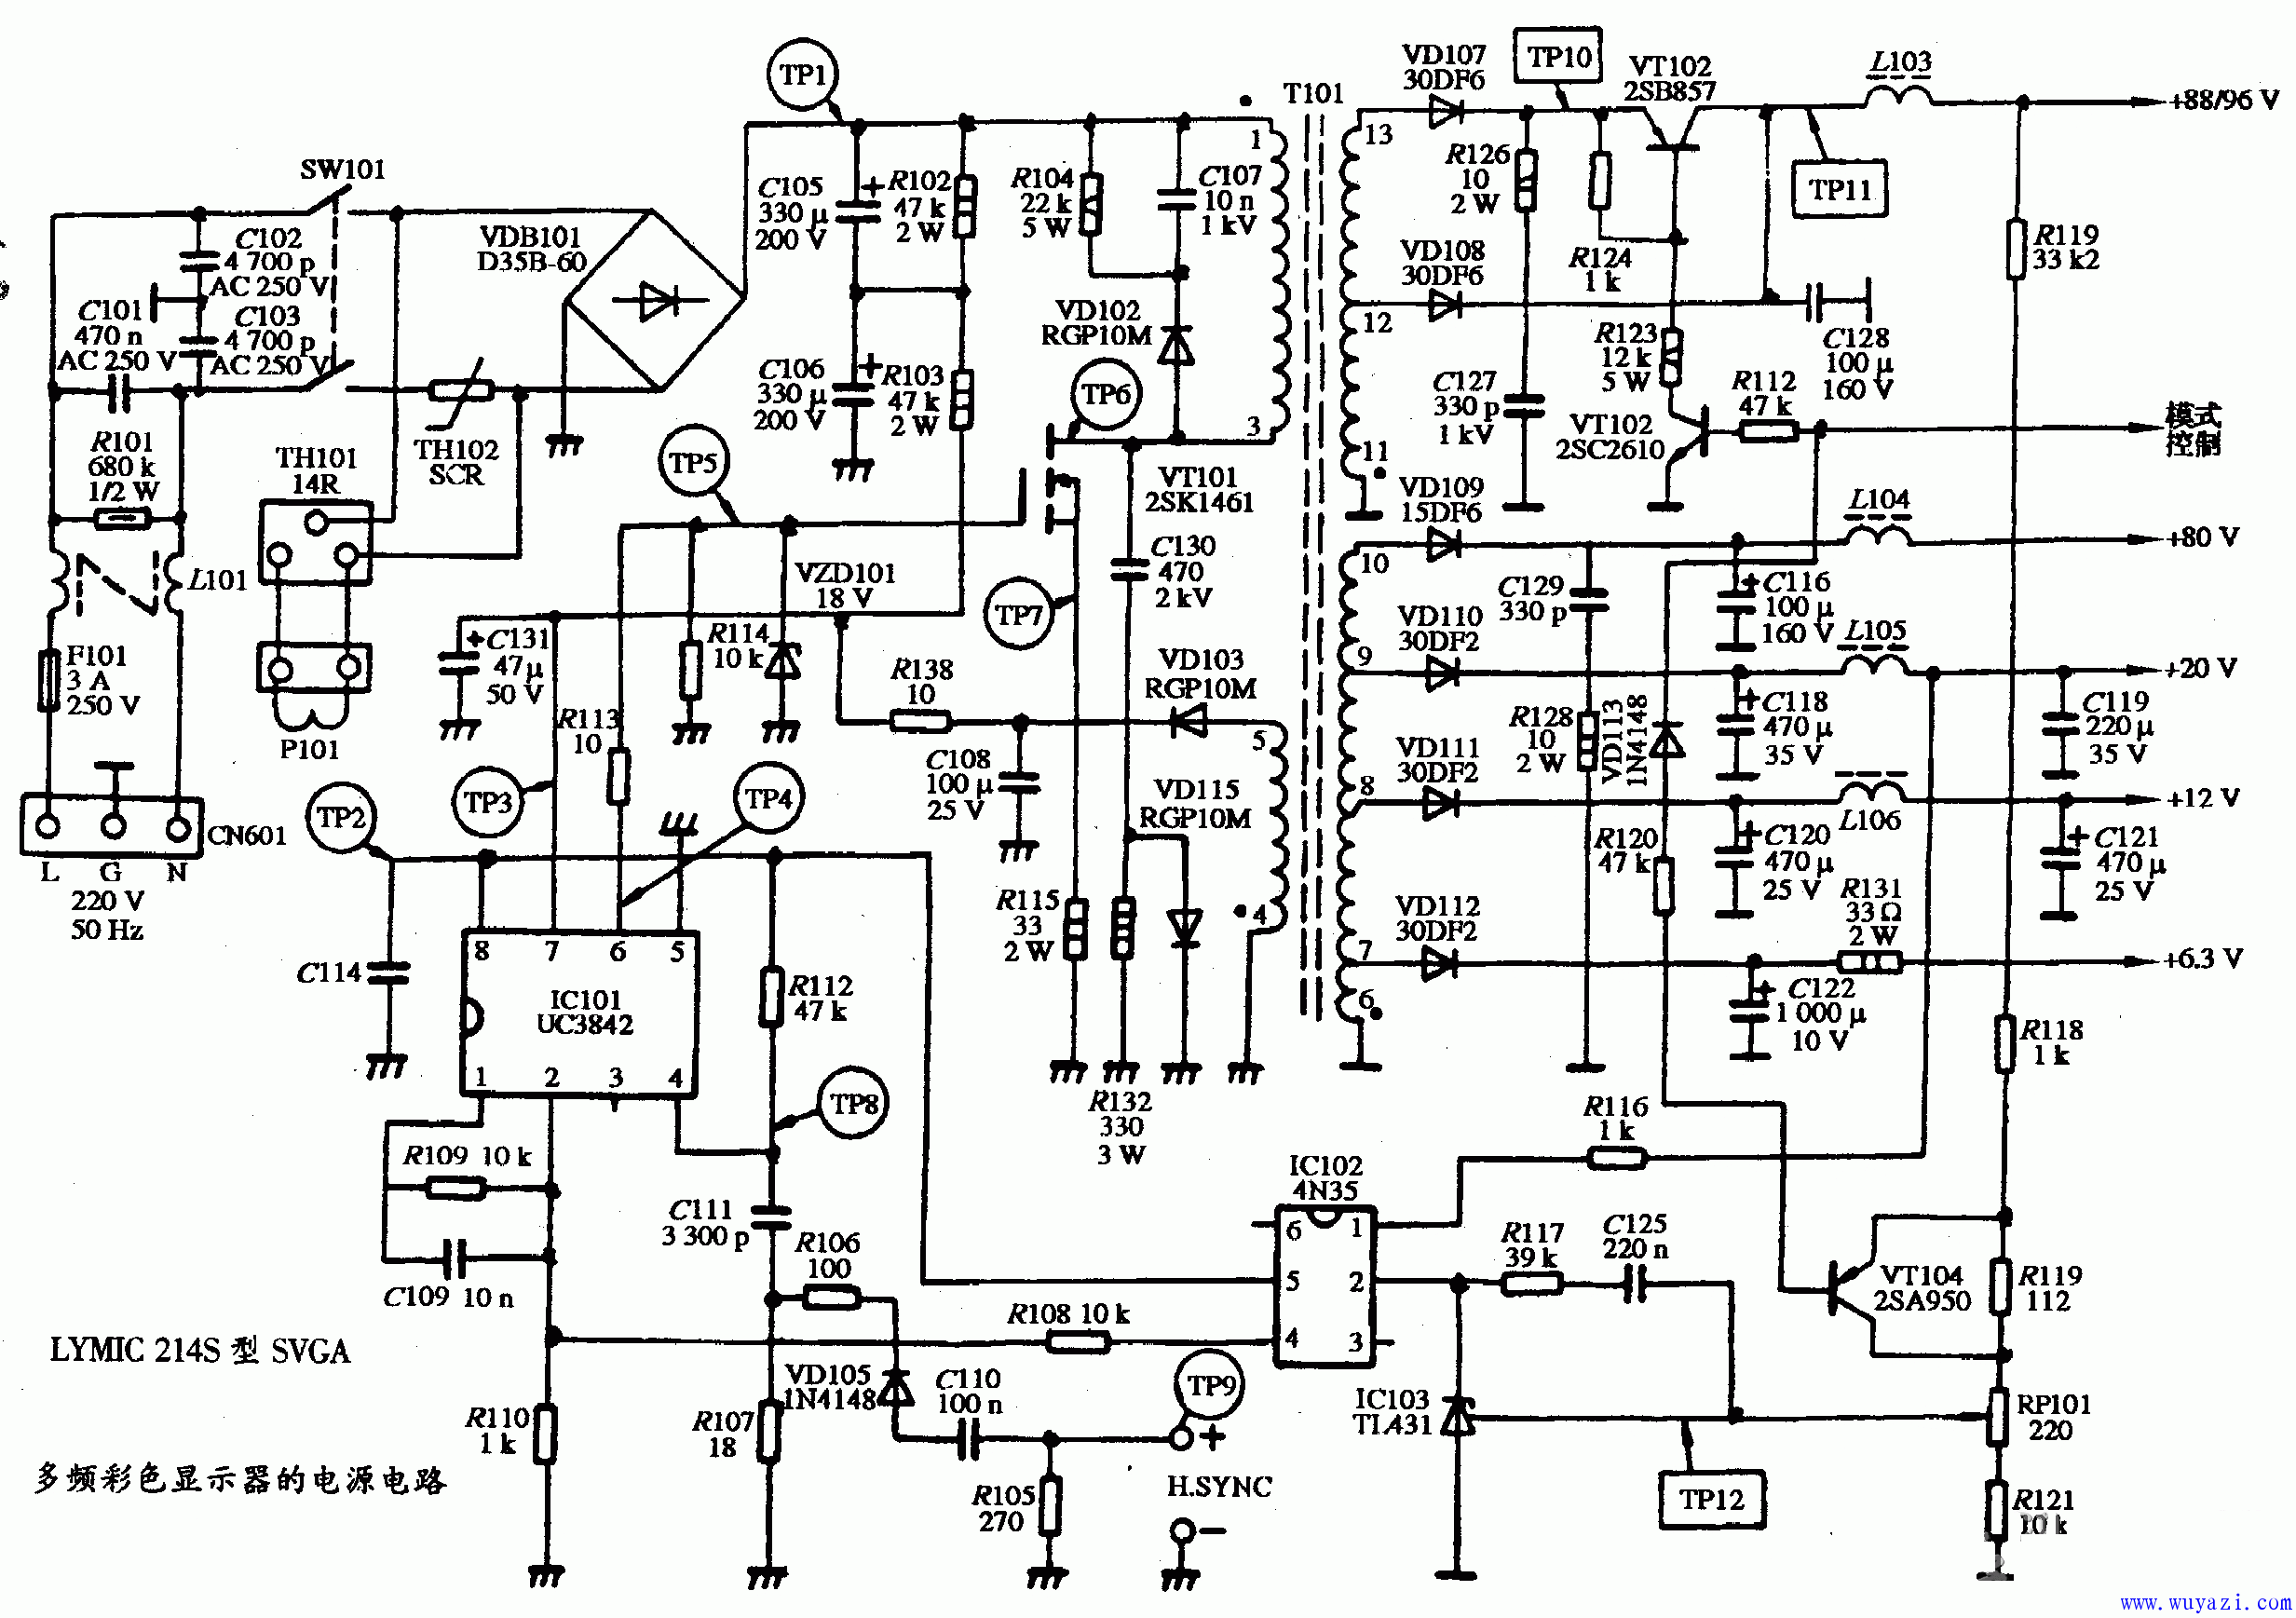 LYMIC 214S型SVGA多頻彩色顯示器的電源電路圖